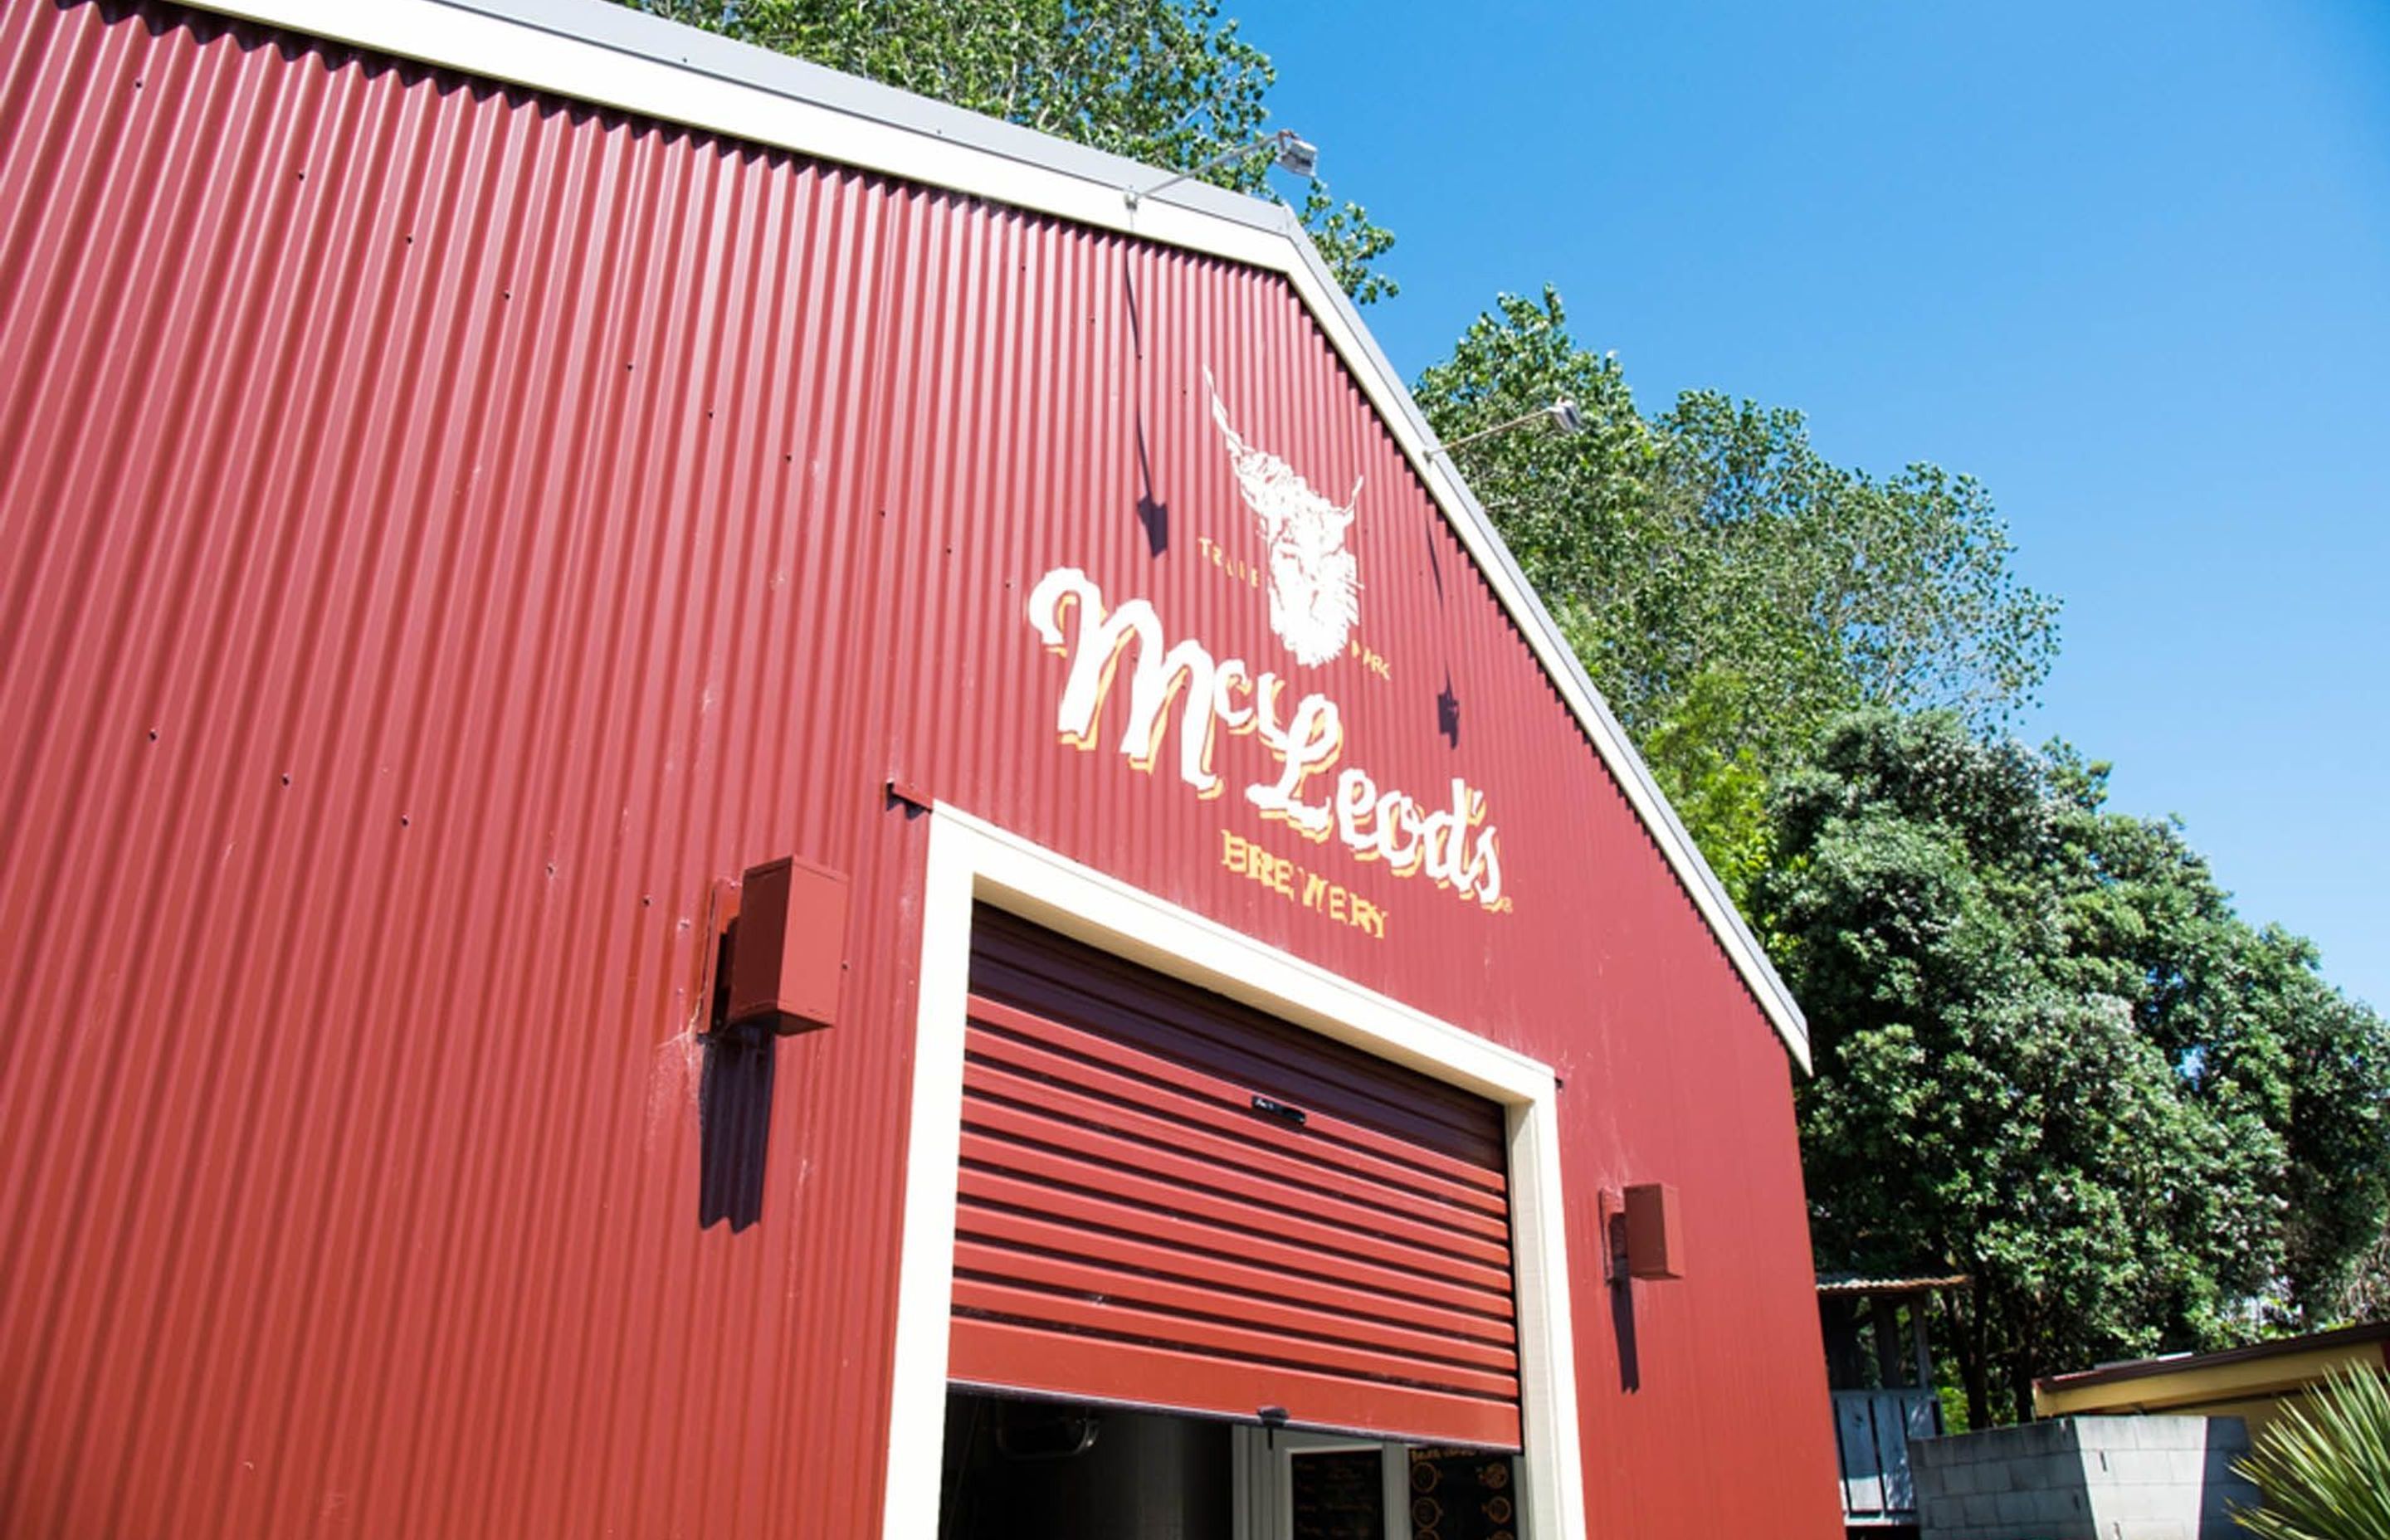 McLeods Brewery Sheds